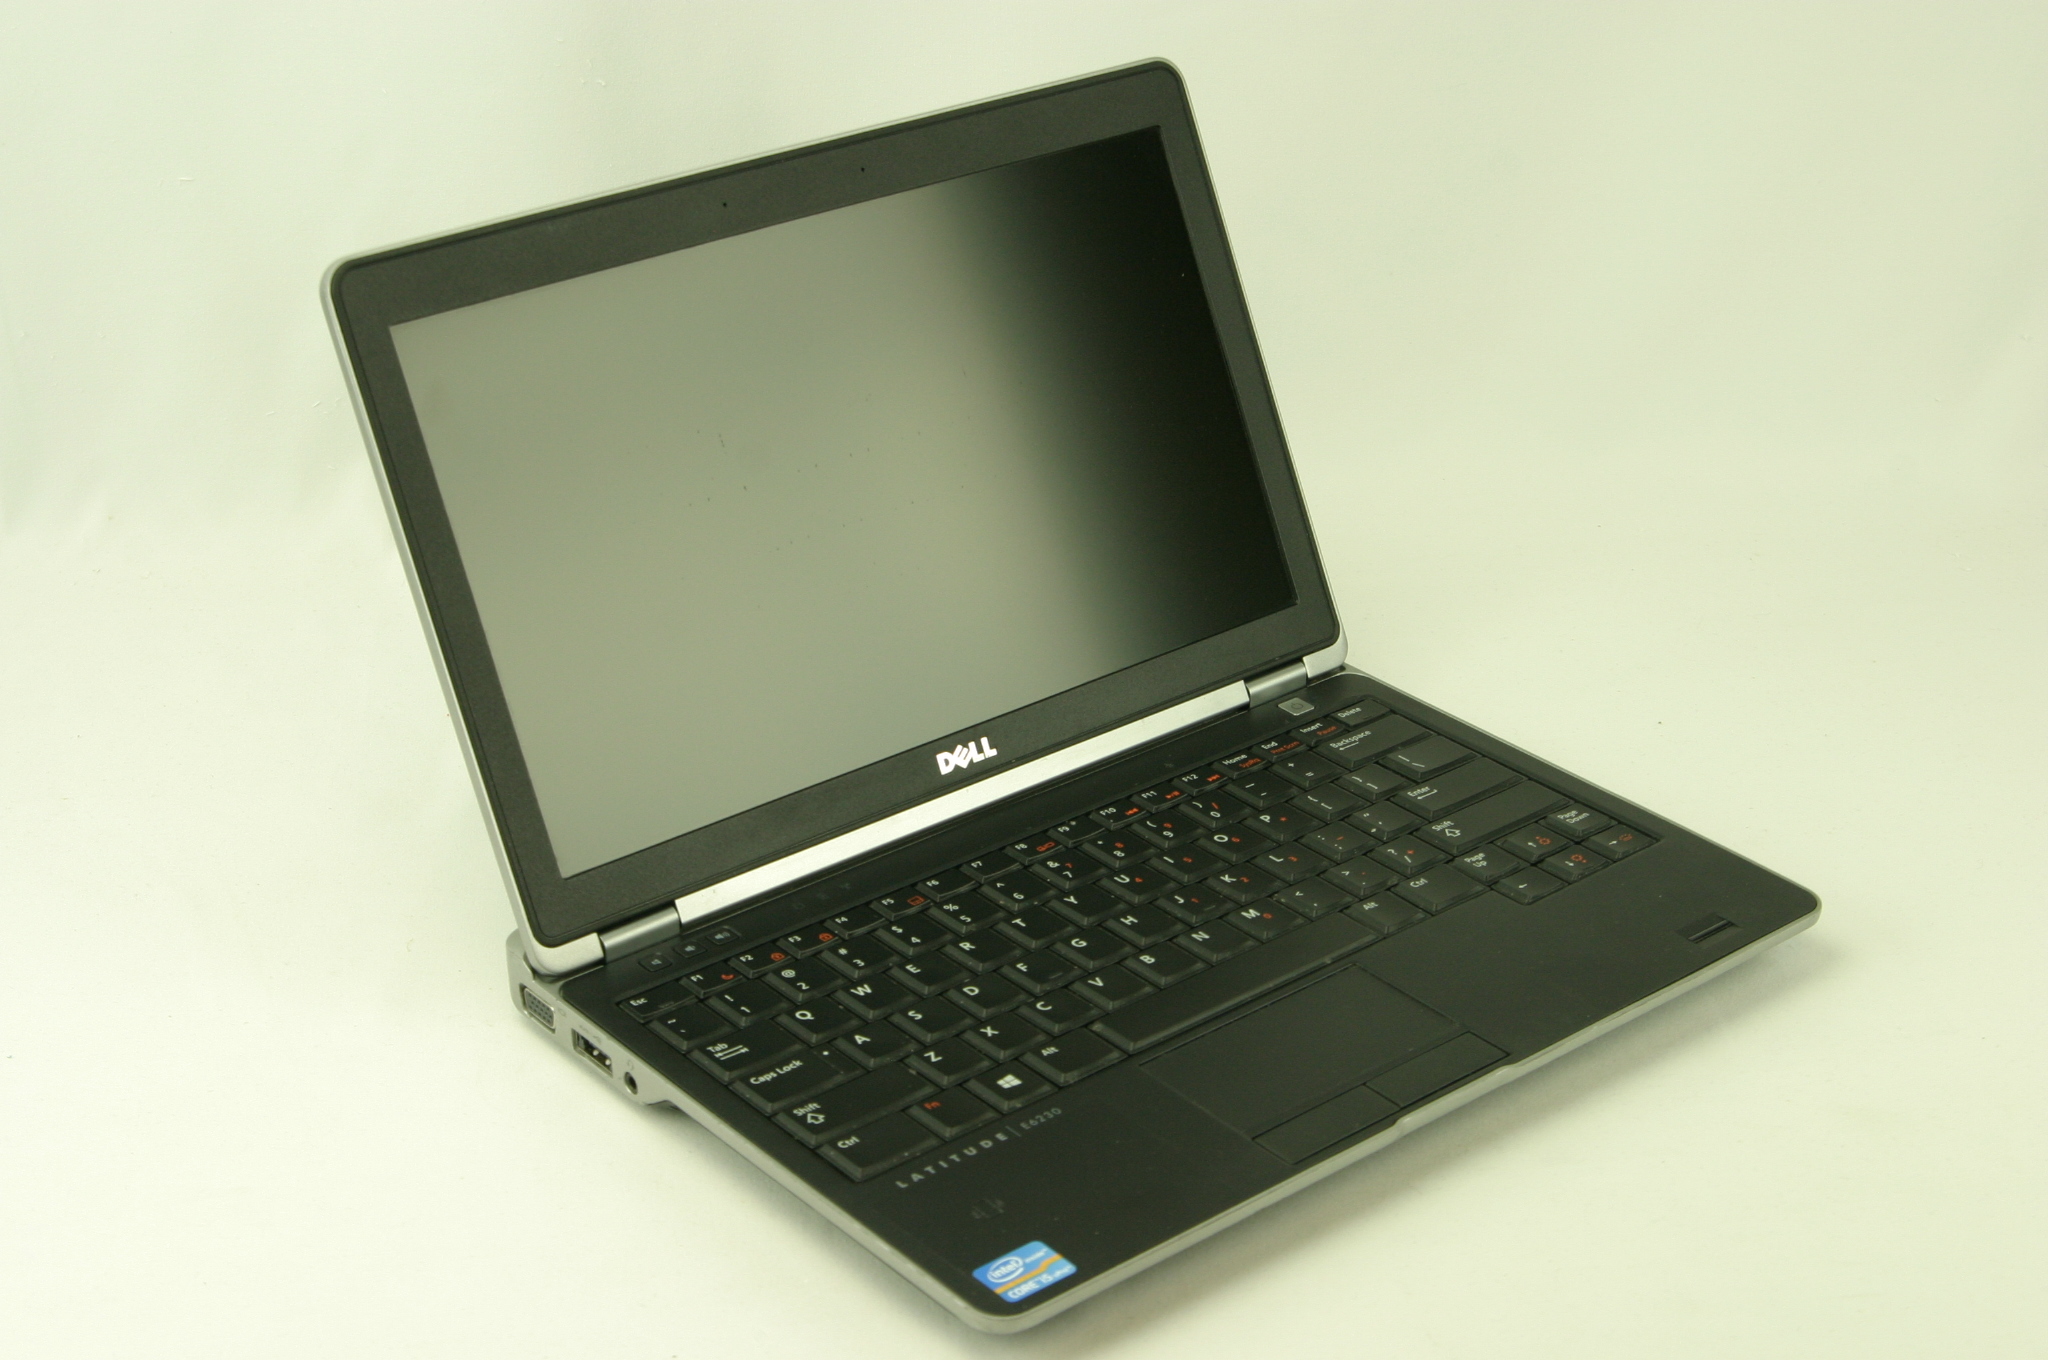 Dell Latitude E6230 laptop
12.5 LCD
i5-3340M 2.7Ghz cpu
8Gb DDR3 RAM
256Gb SSD
Backlit keyboard
Windows 10 Pro 64bit
(no optical drive)
sku: GDZYKX1